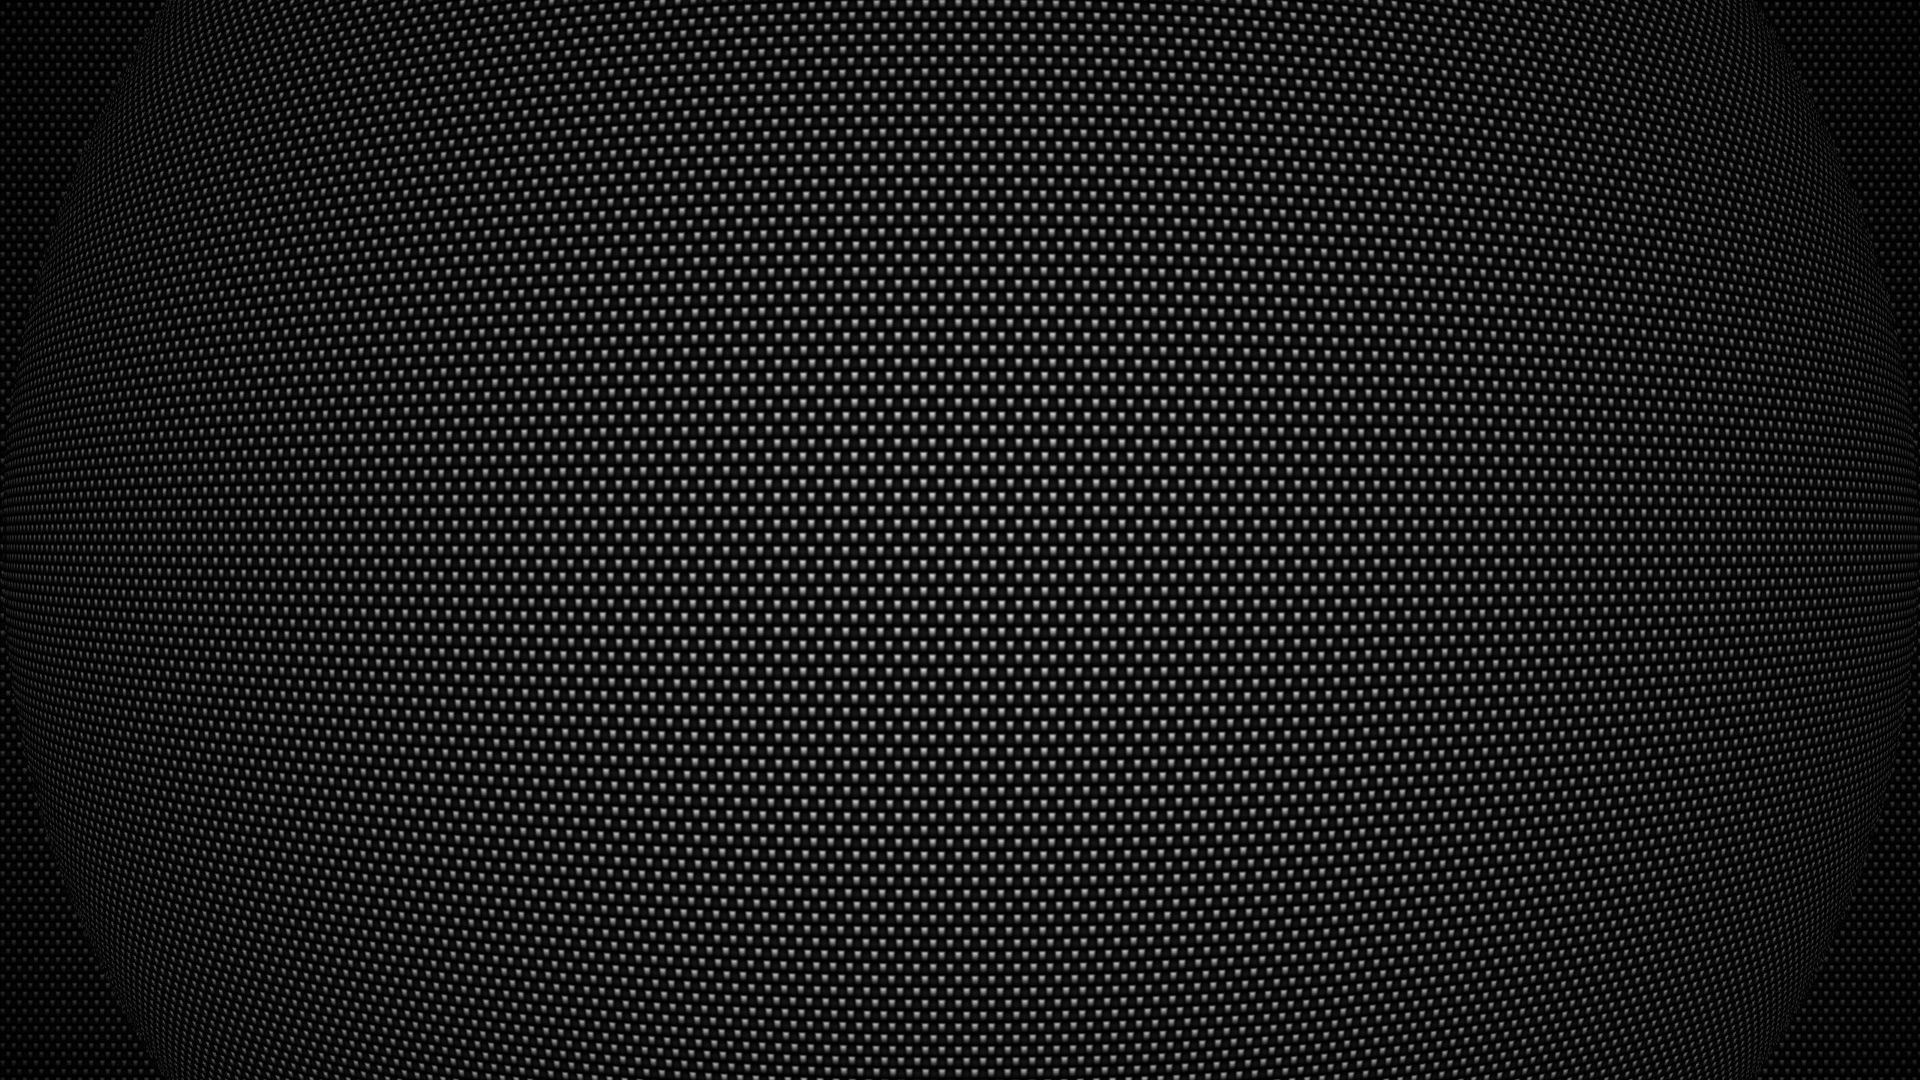 Dots full hd 1080p wallpaper